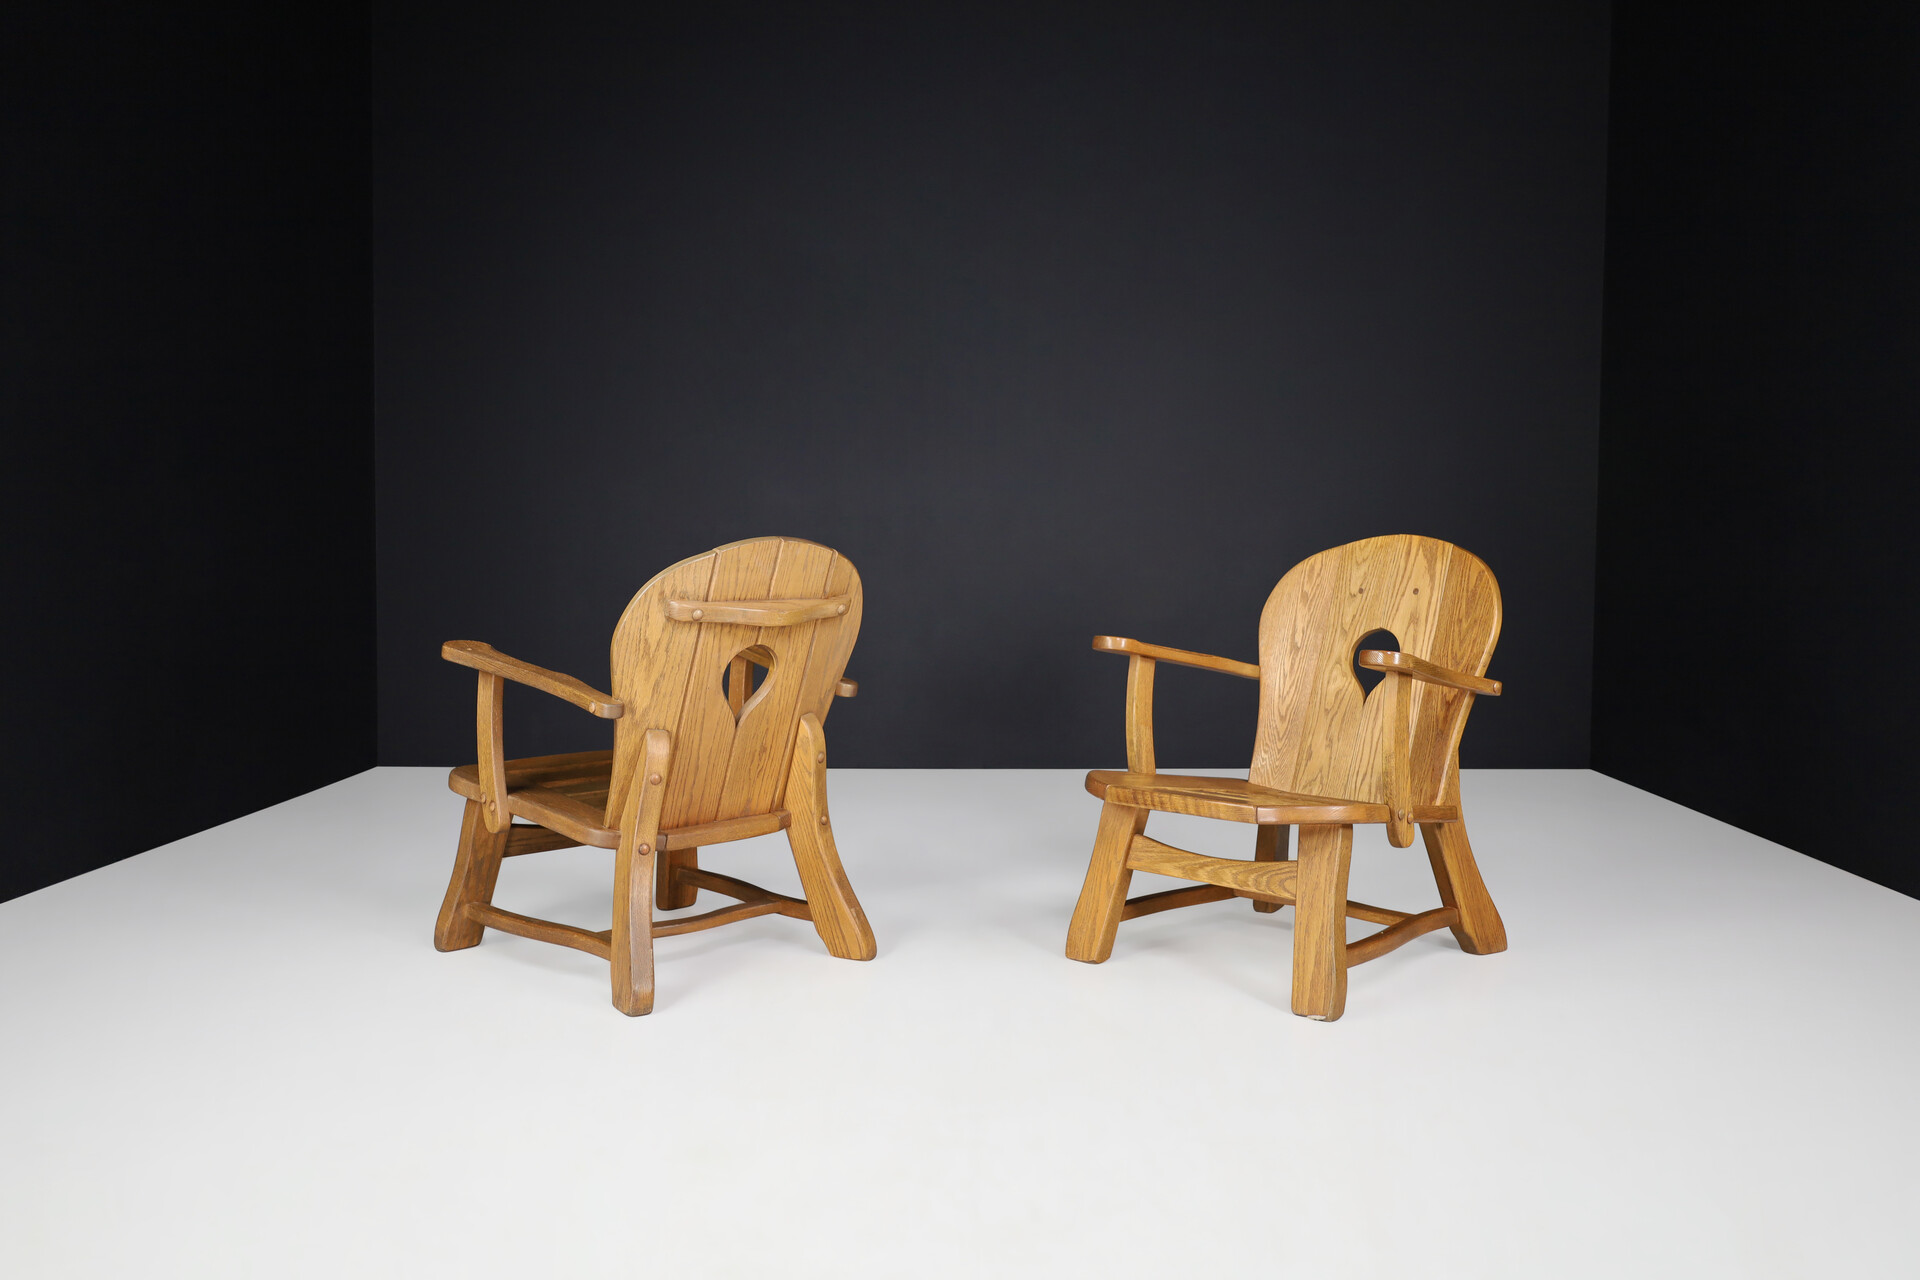 Brutalist Oak lounge chairs in solid oak, France 1960s Mid-20th century